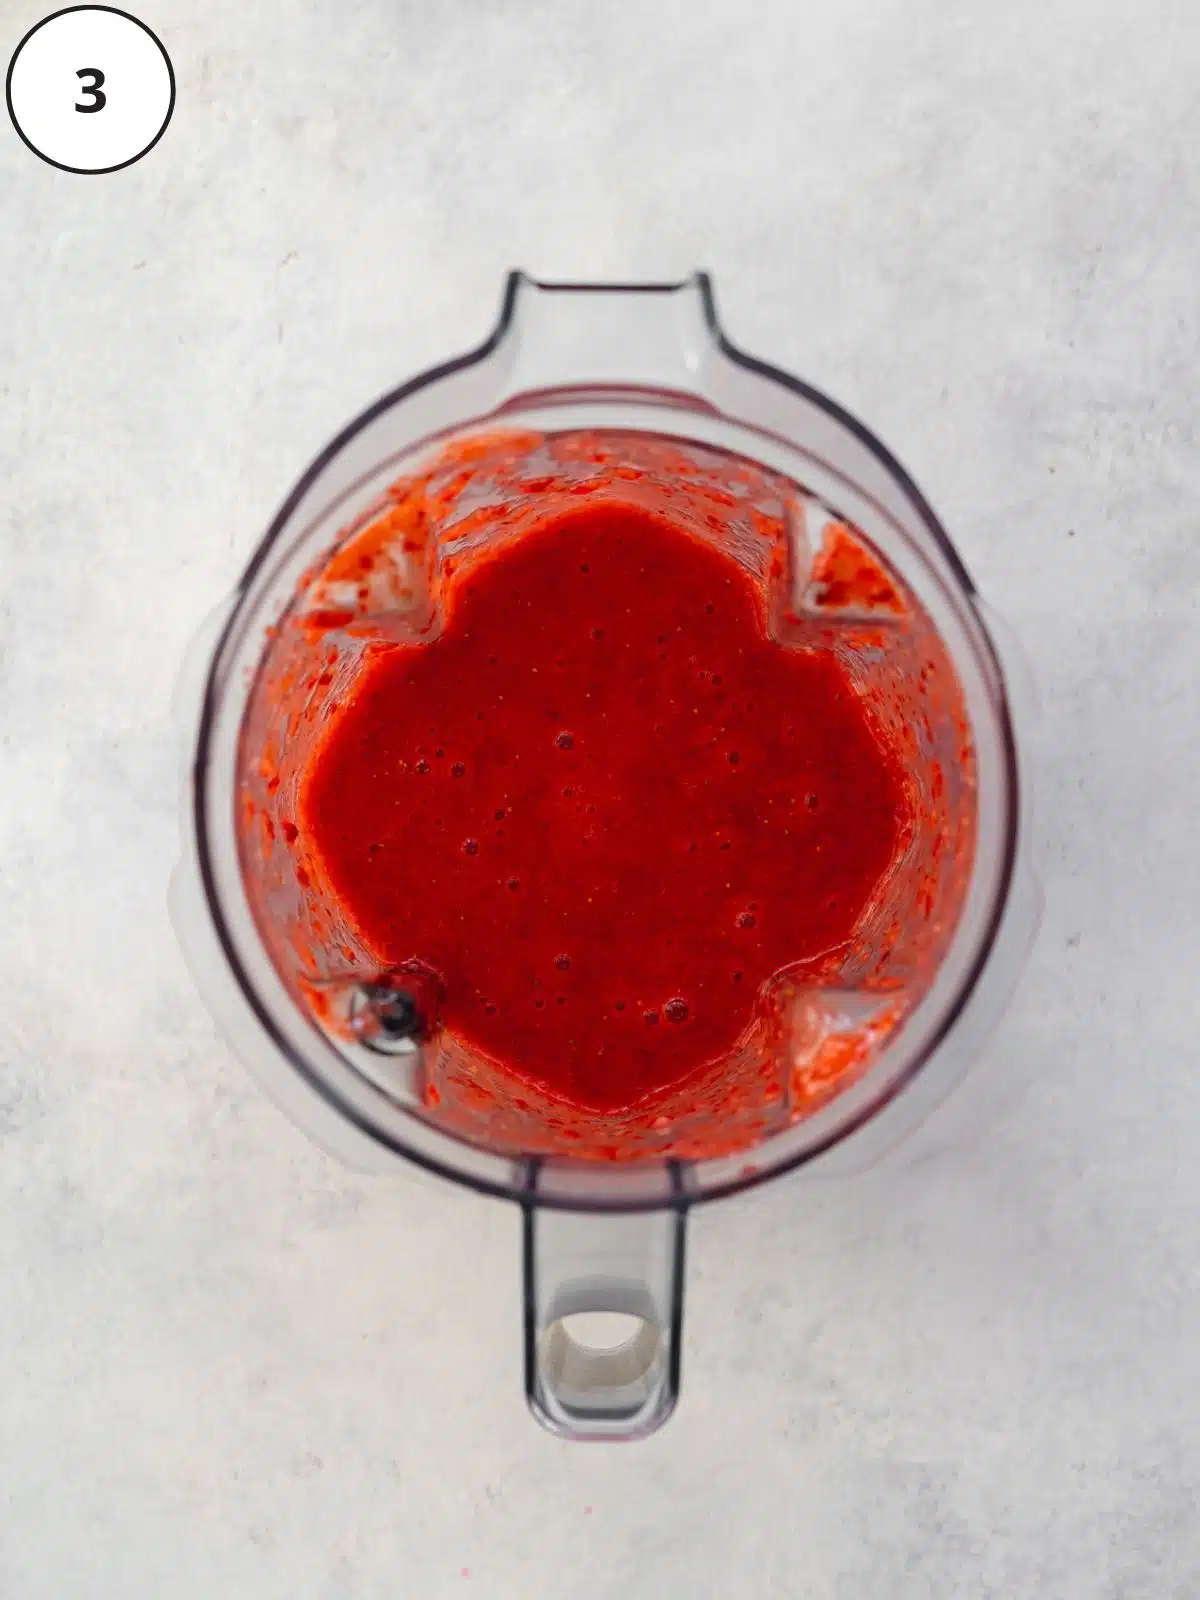 strawberry puree blended until smooth in a blender jug.